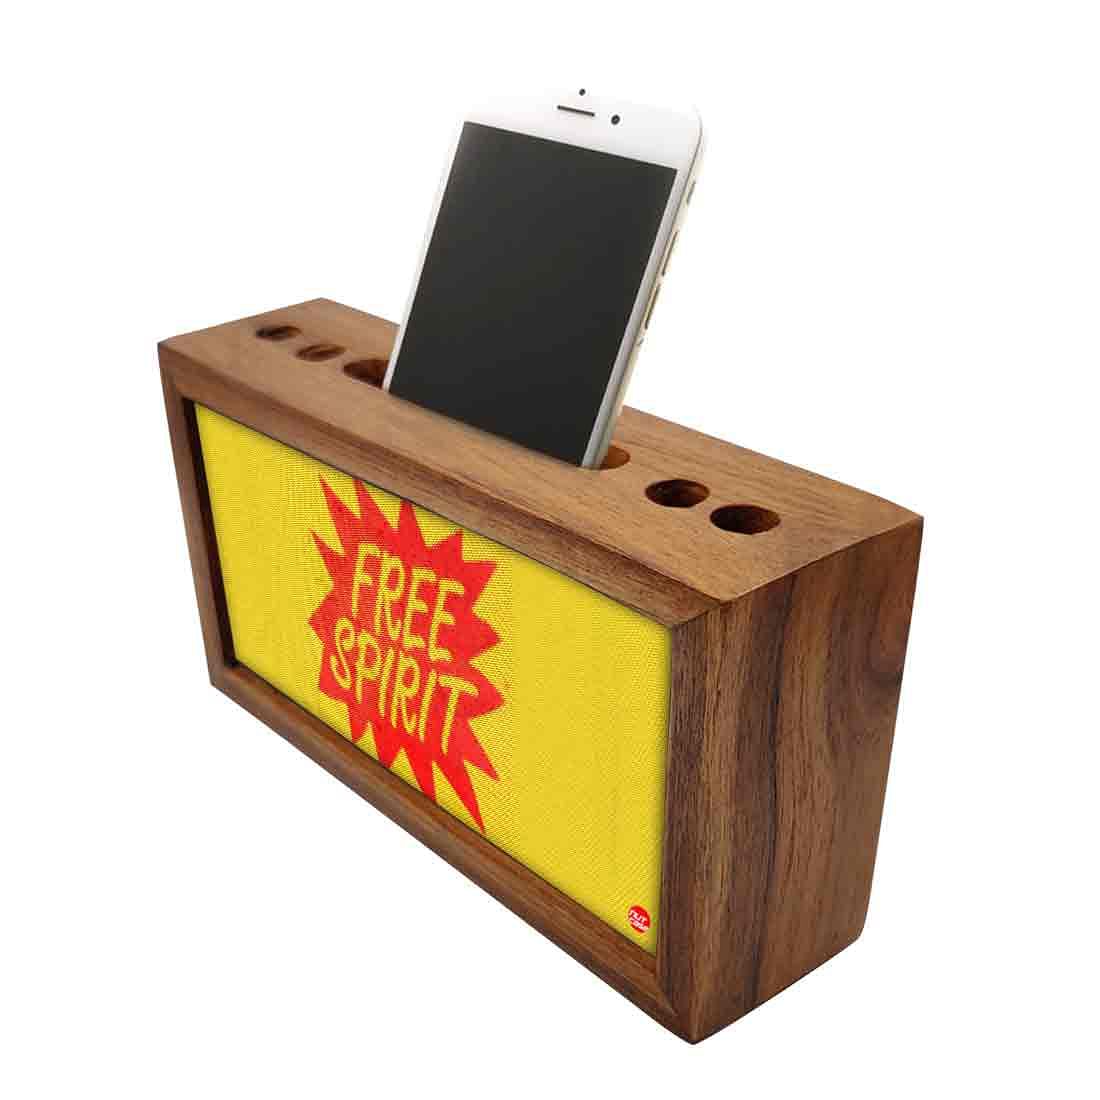 Wooden Desk Organizer Pen Mobile Stand - Free Spirit Nutcase